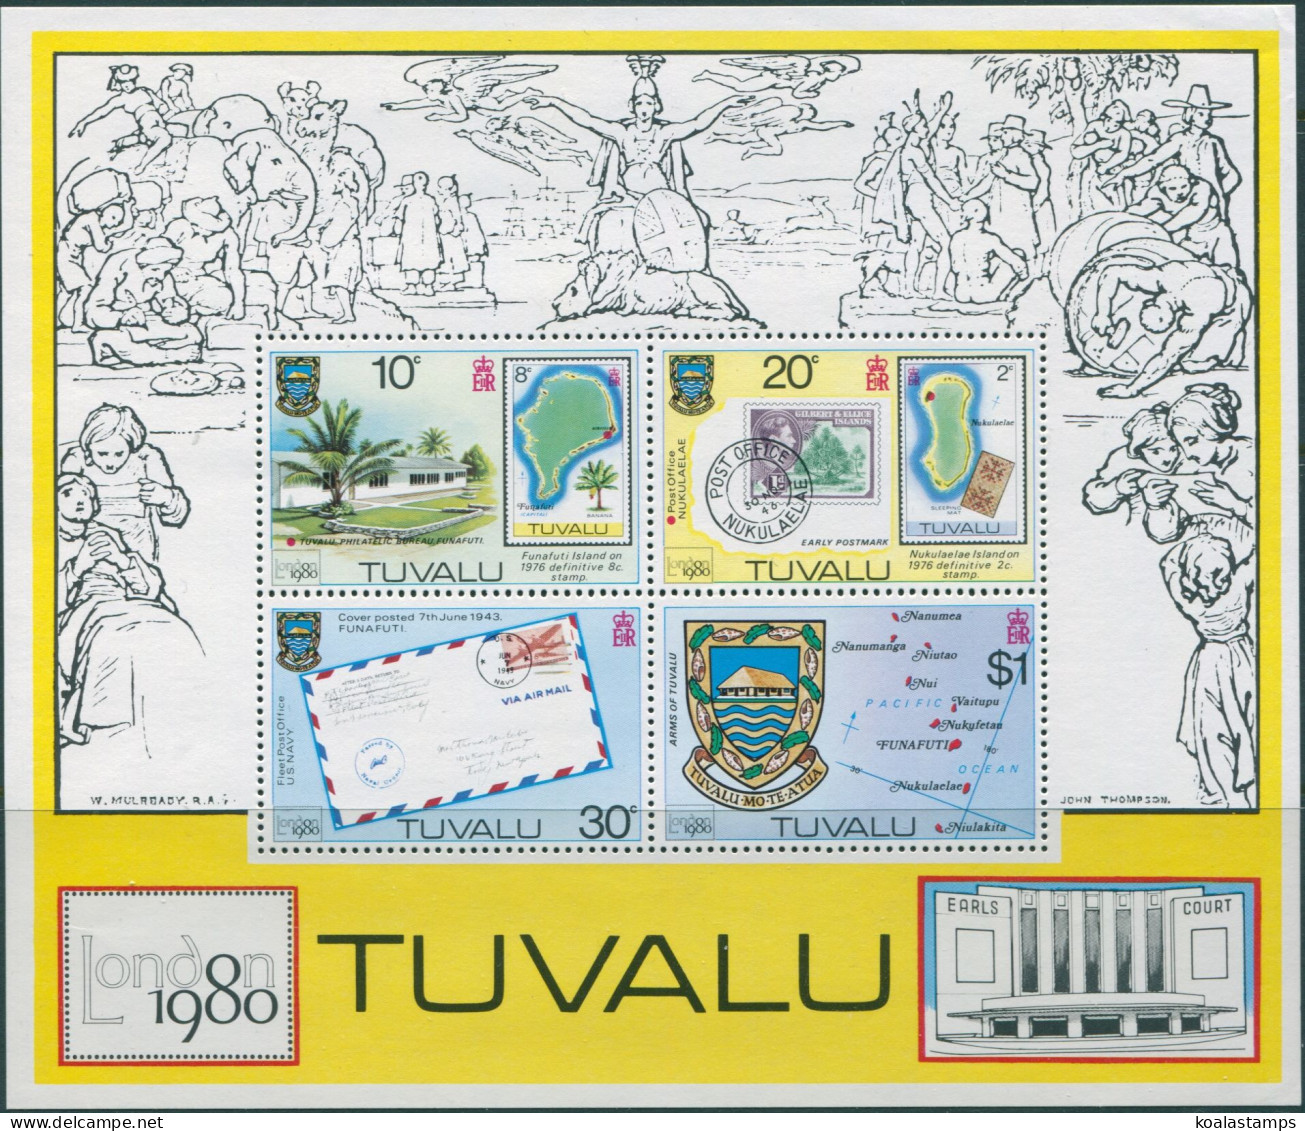 Tuvalu 1980 SG147 London Stamp Exhibition MS MNH - Tuvalu